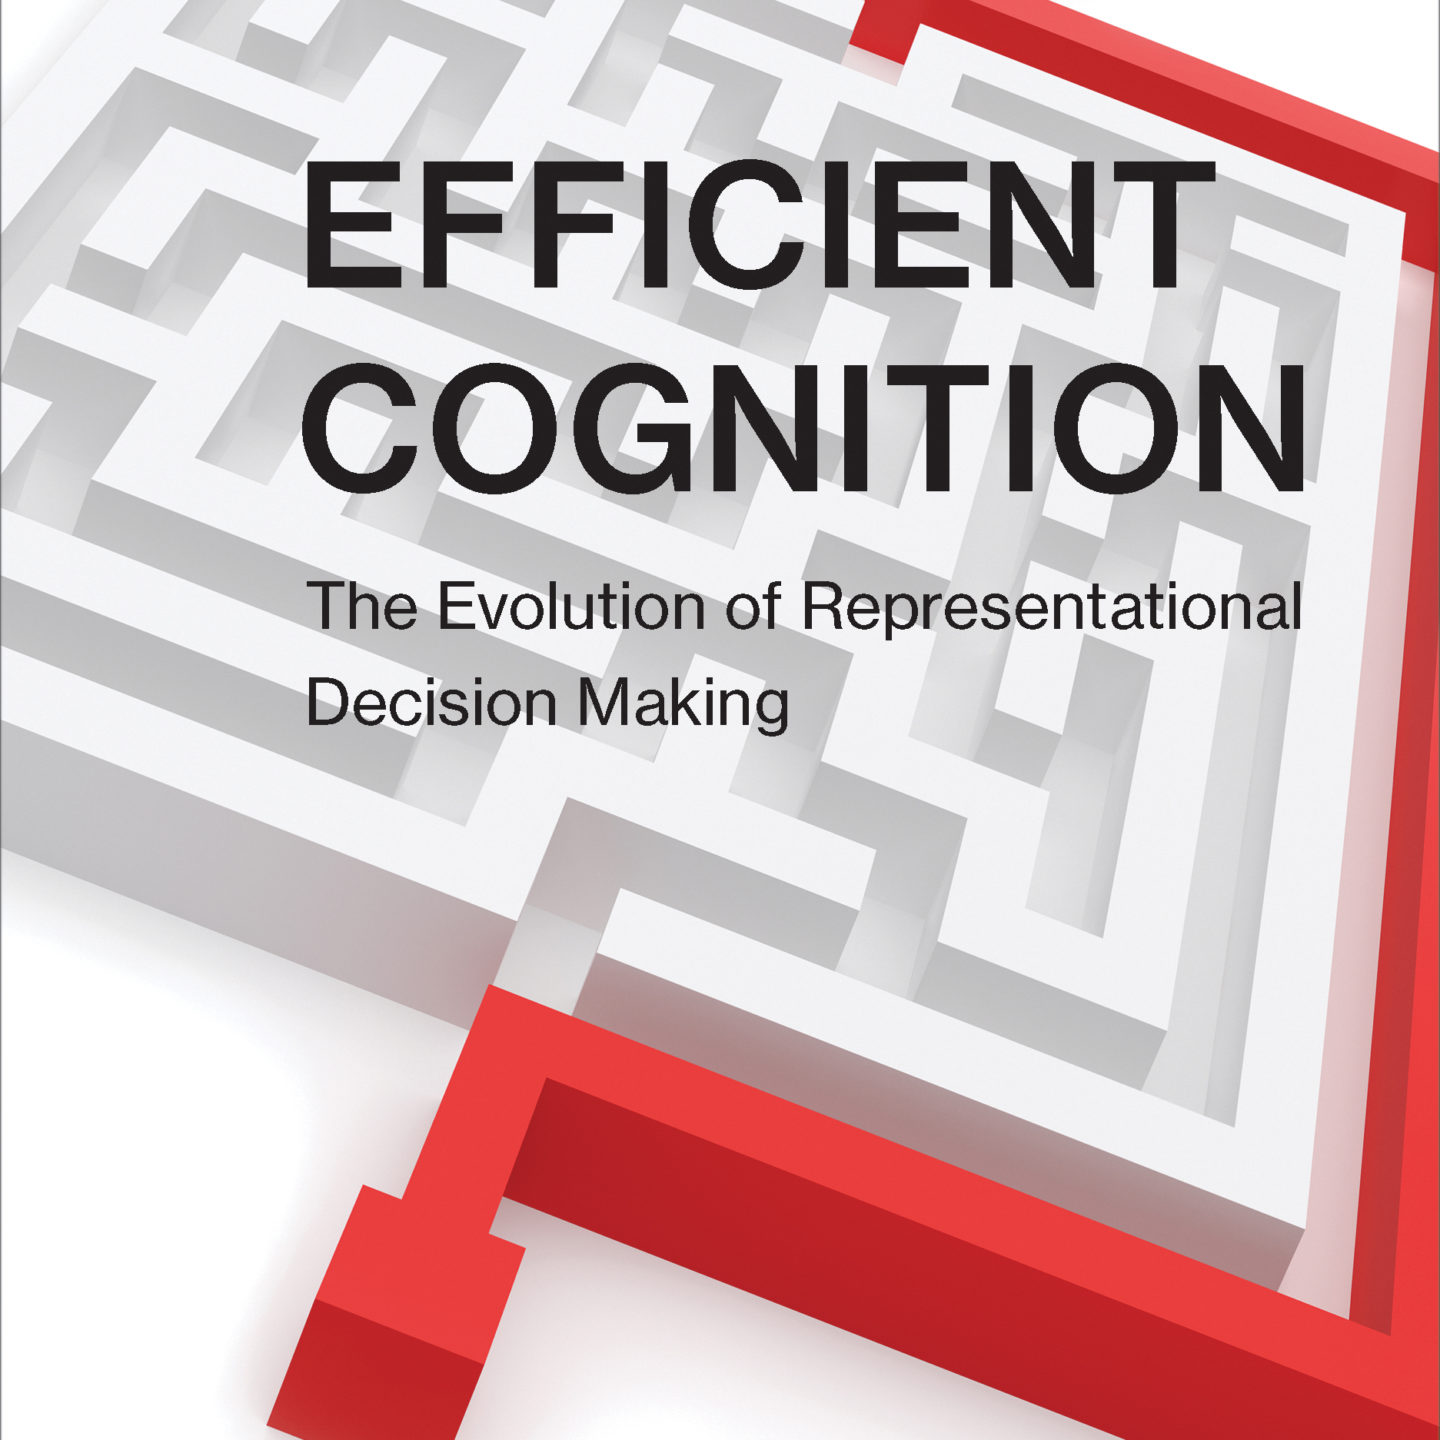 Efficient Cognition—The Evolution of Representational Decision Making